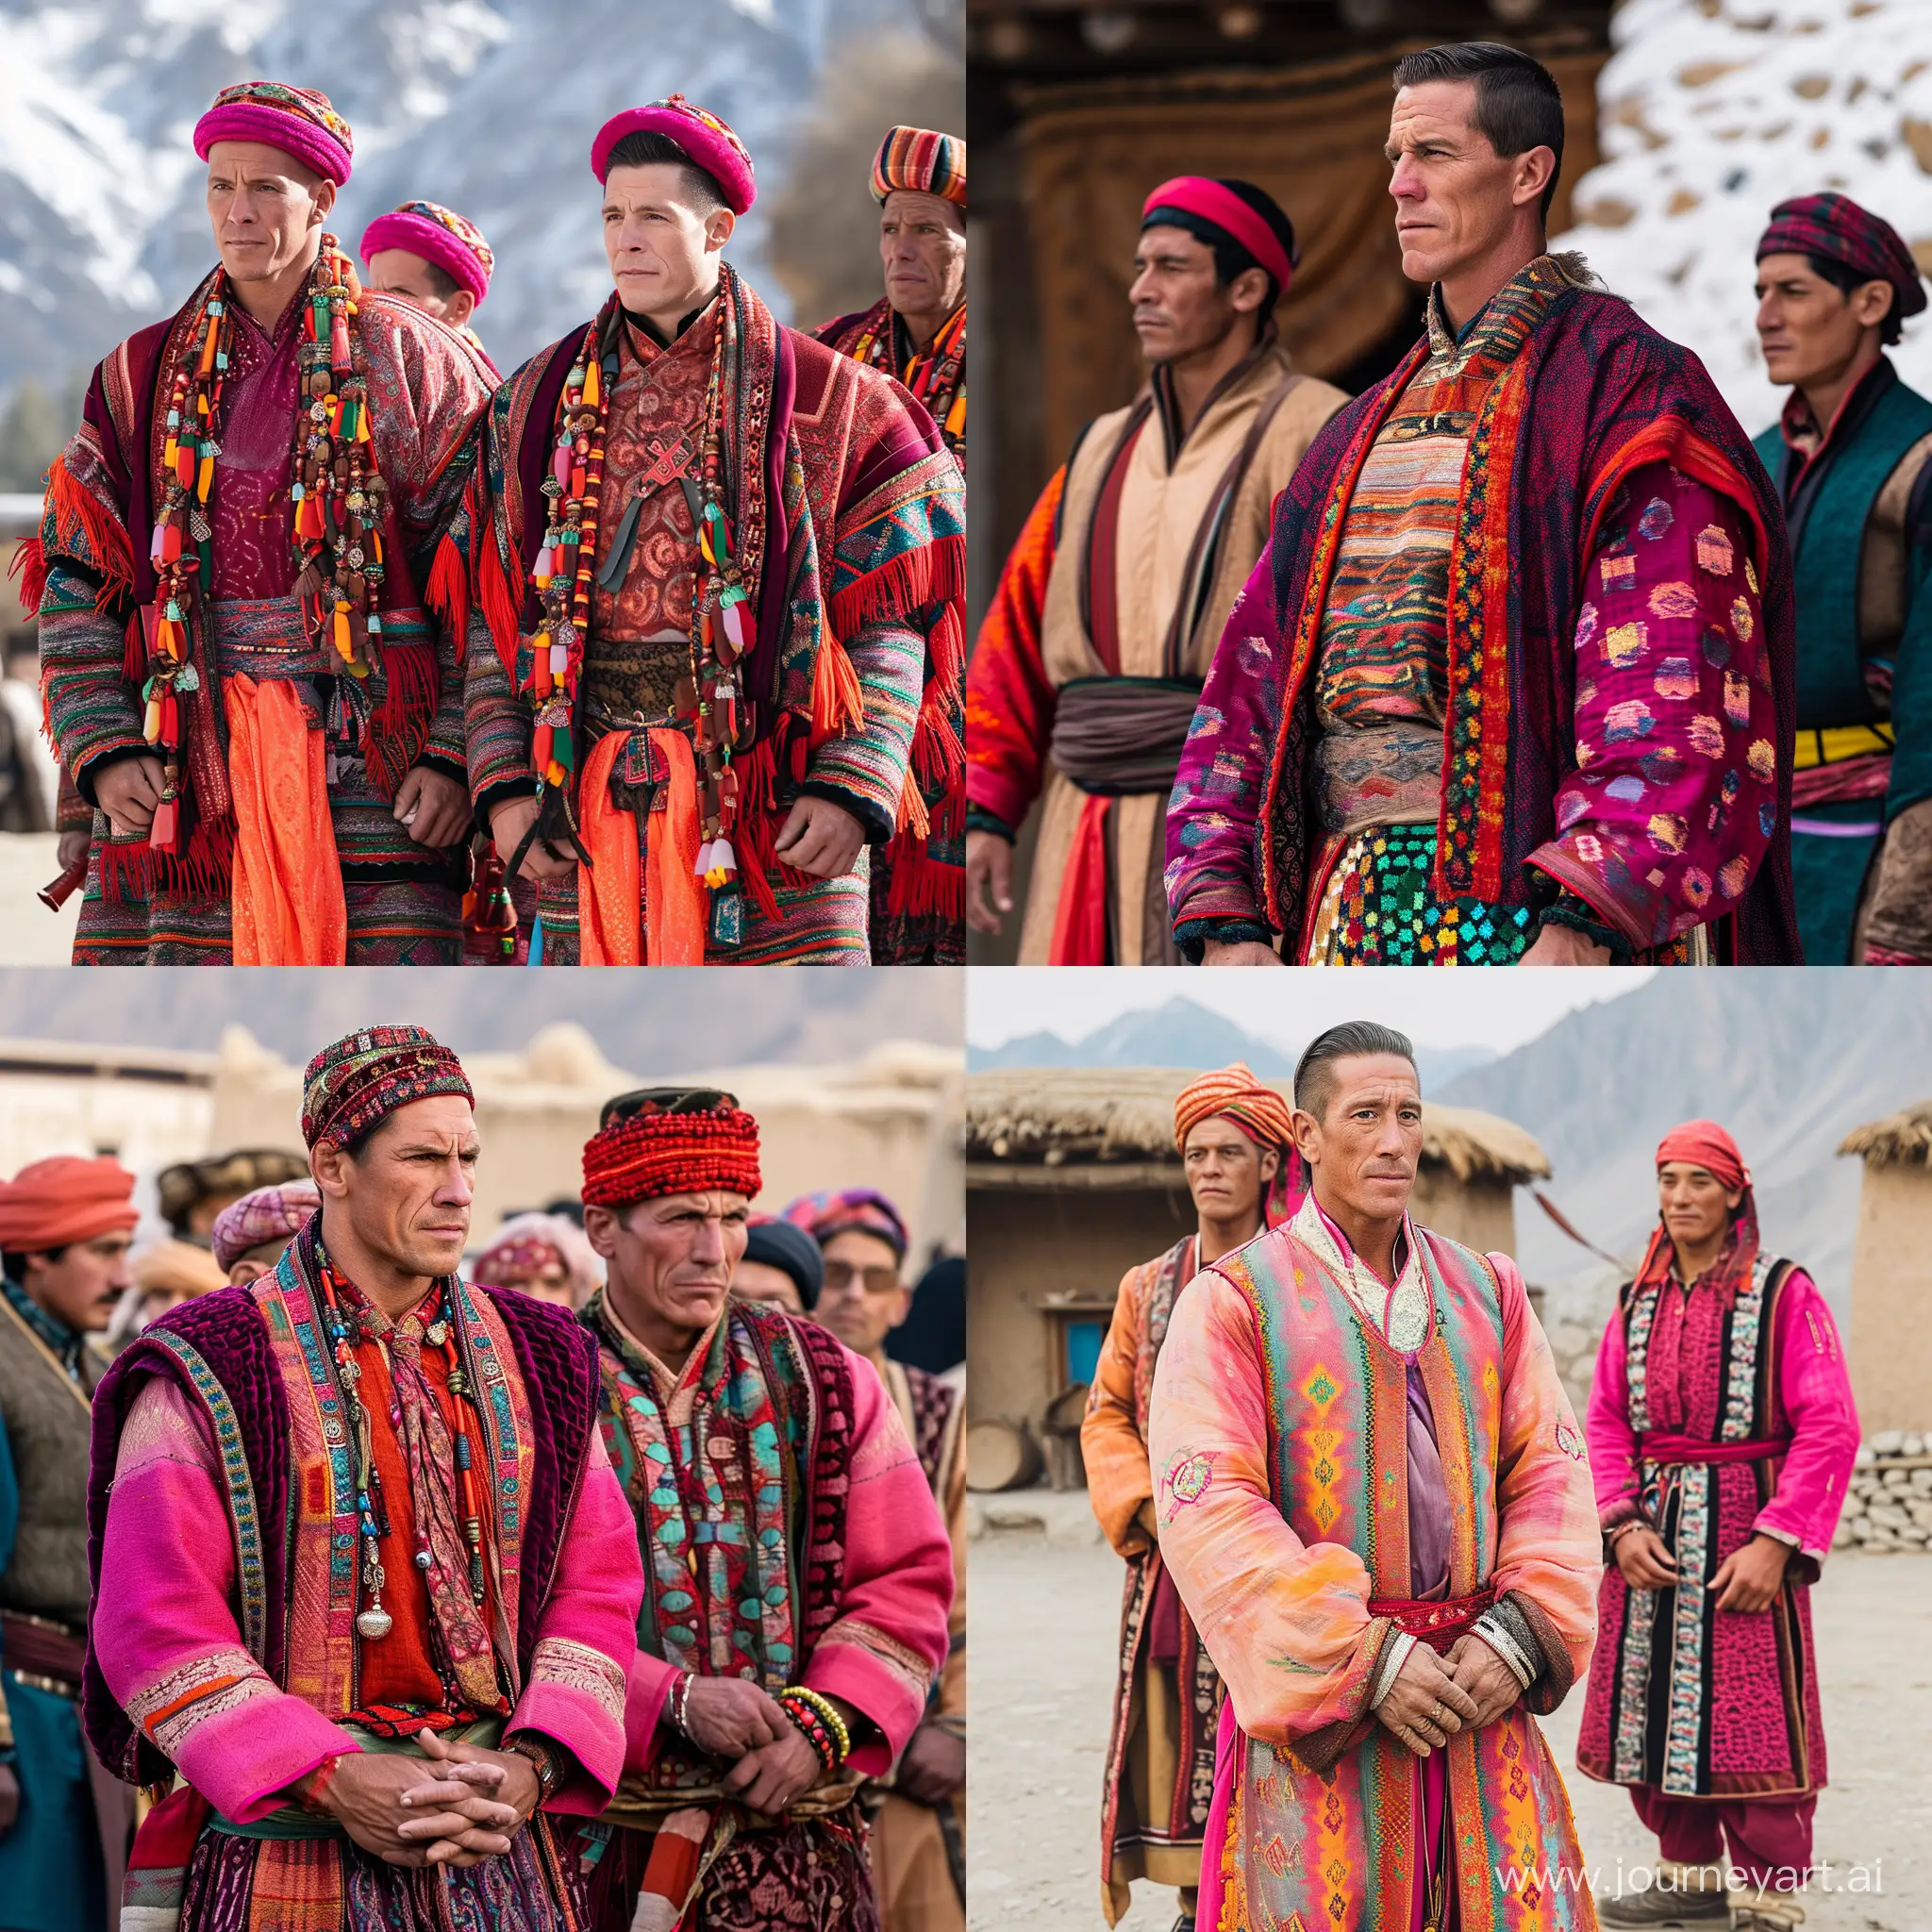 John Cena as ladakhi men in the traditional dress of ladakhi and balti